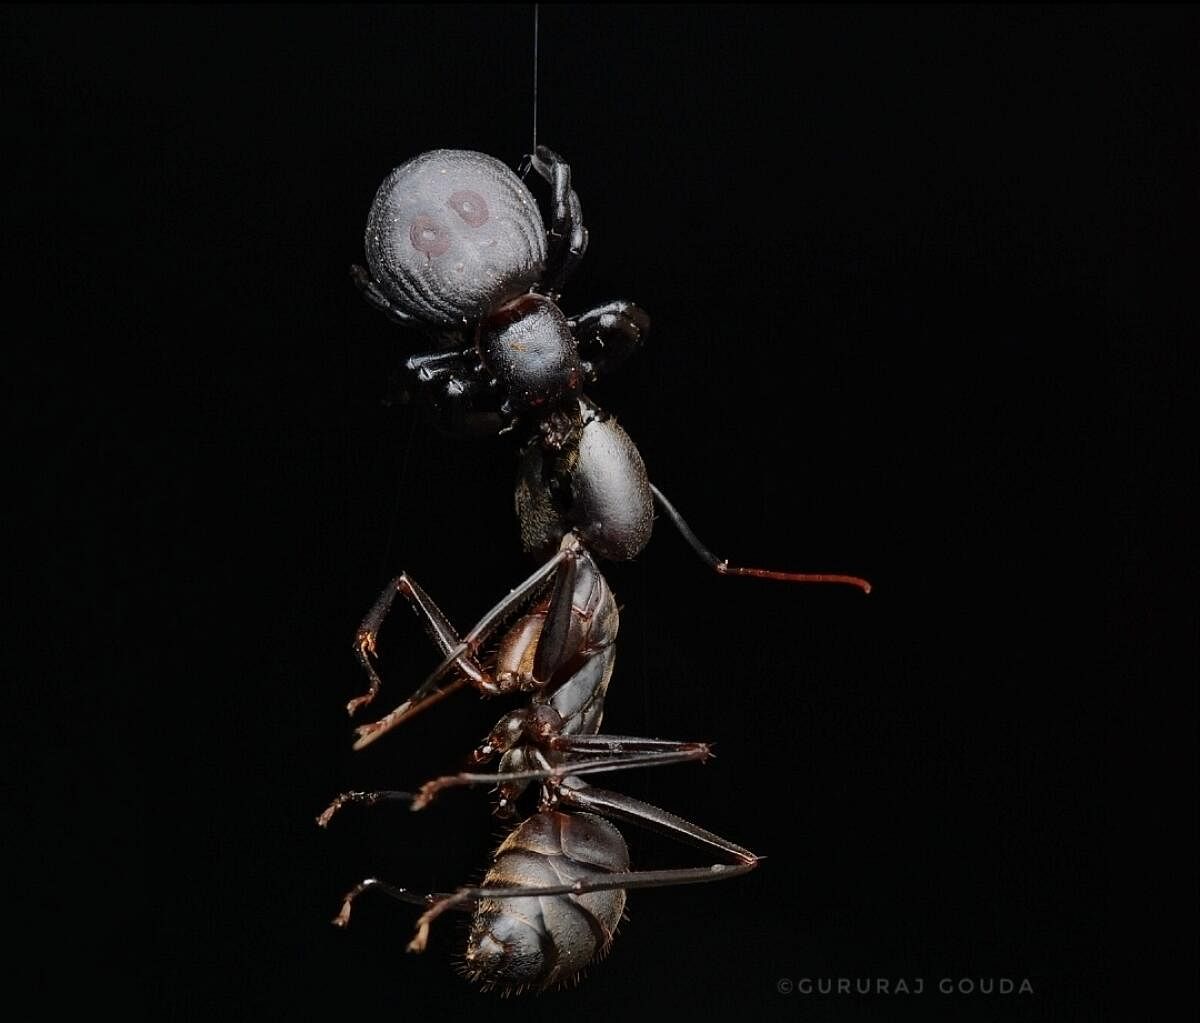 The Stiphropus spider feeding on an ant.